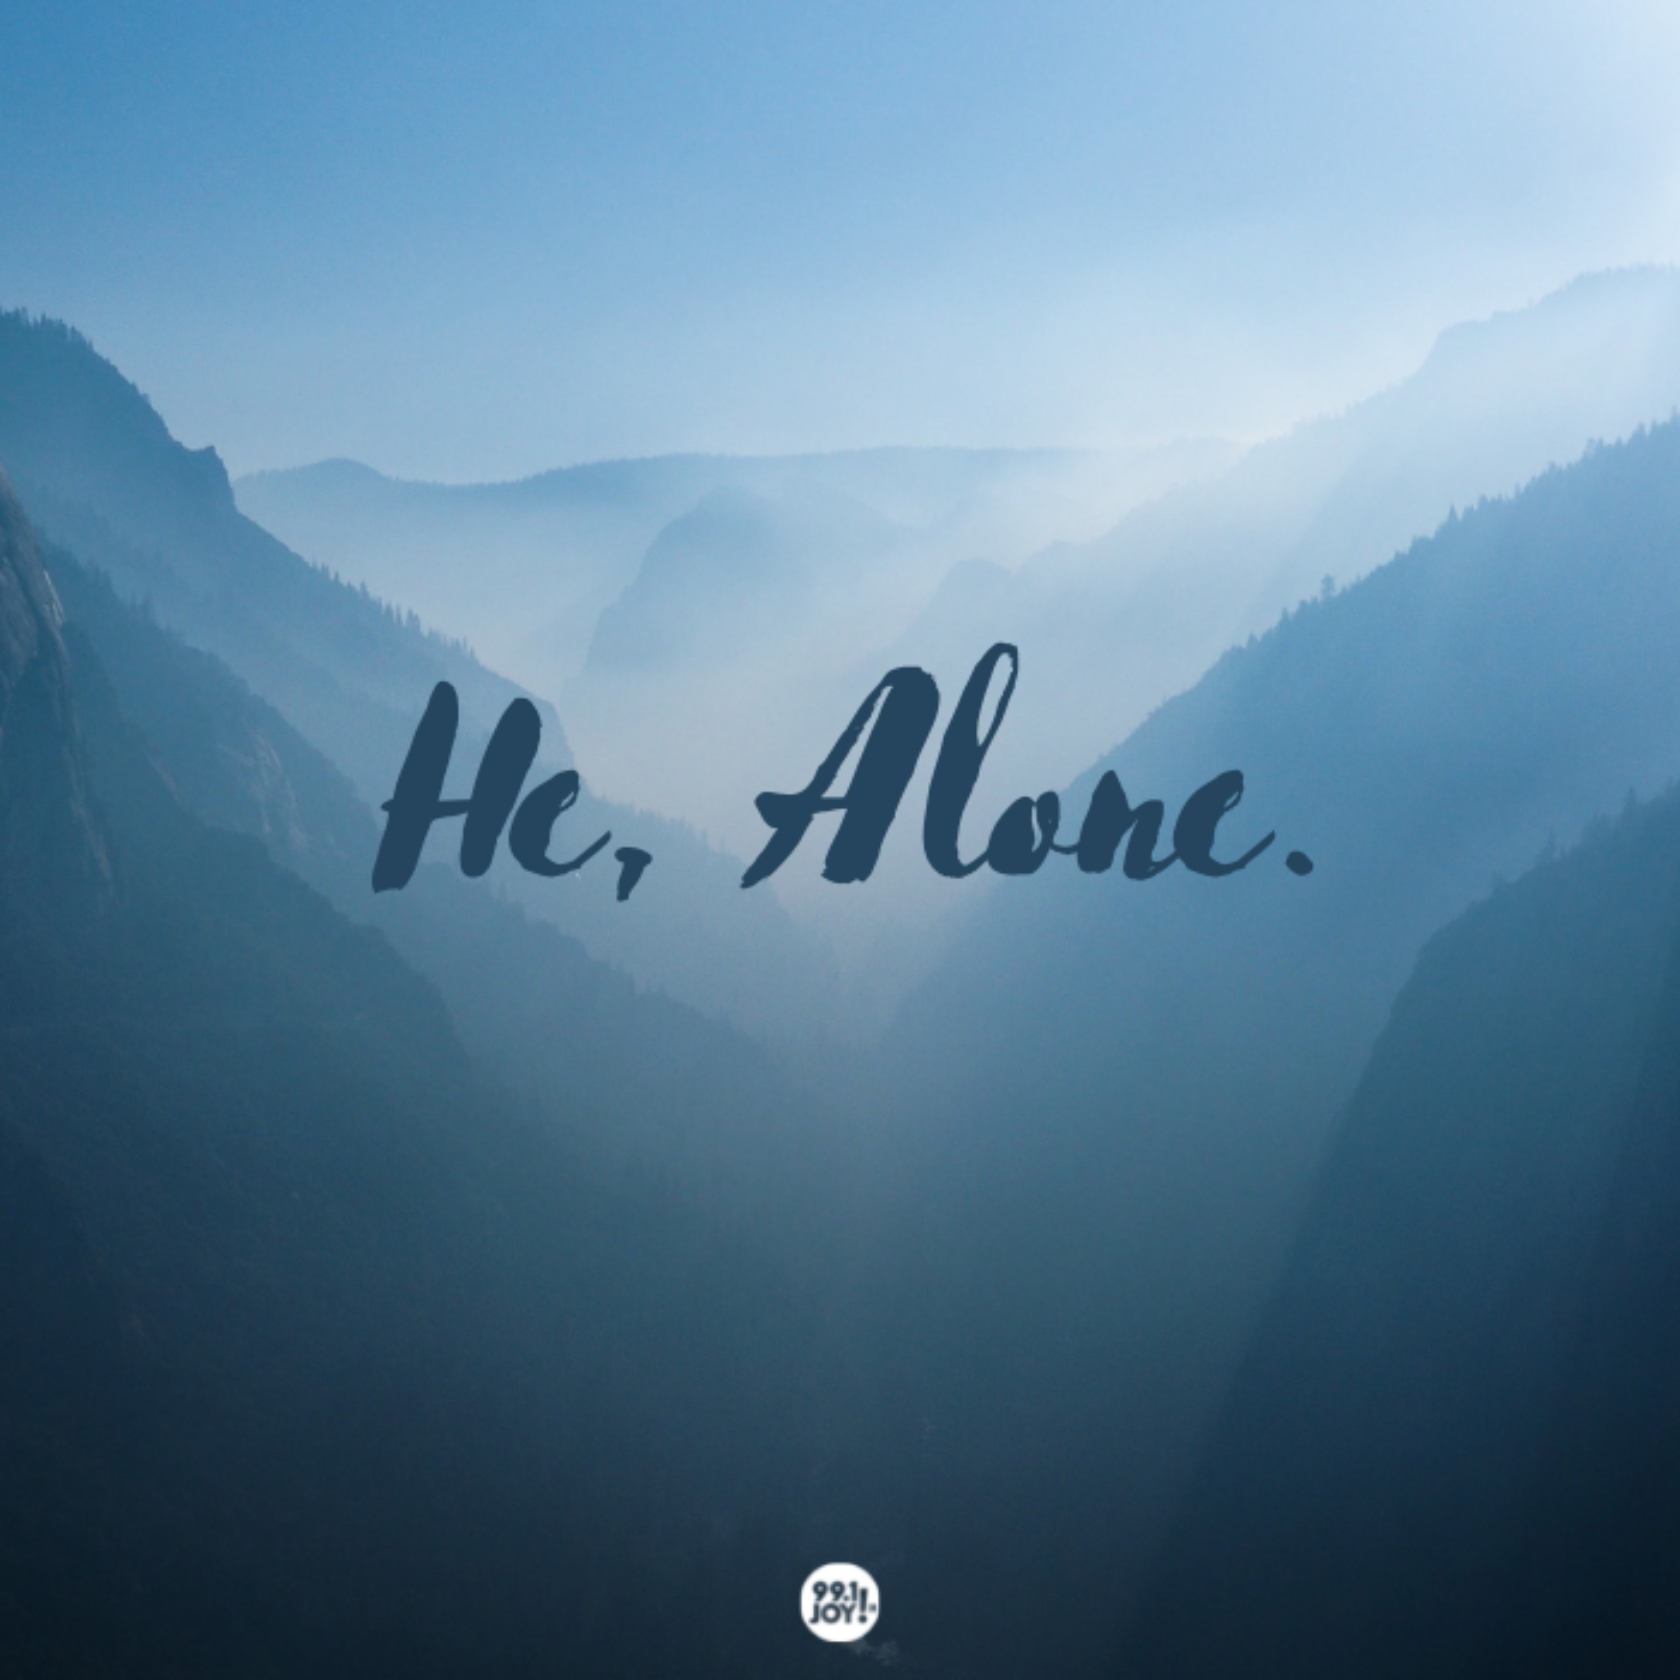 He, Alone.